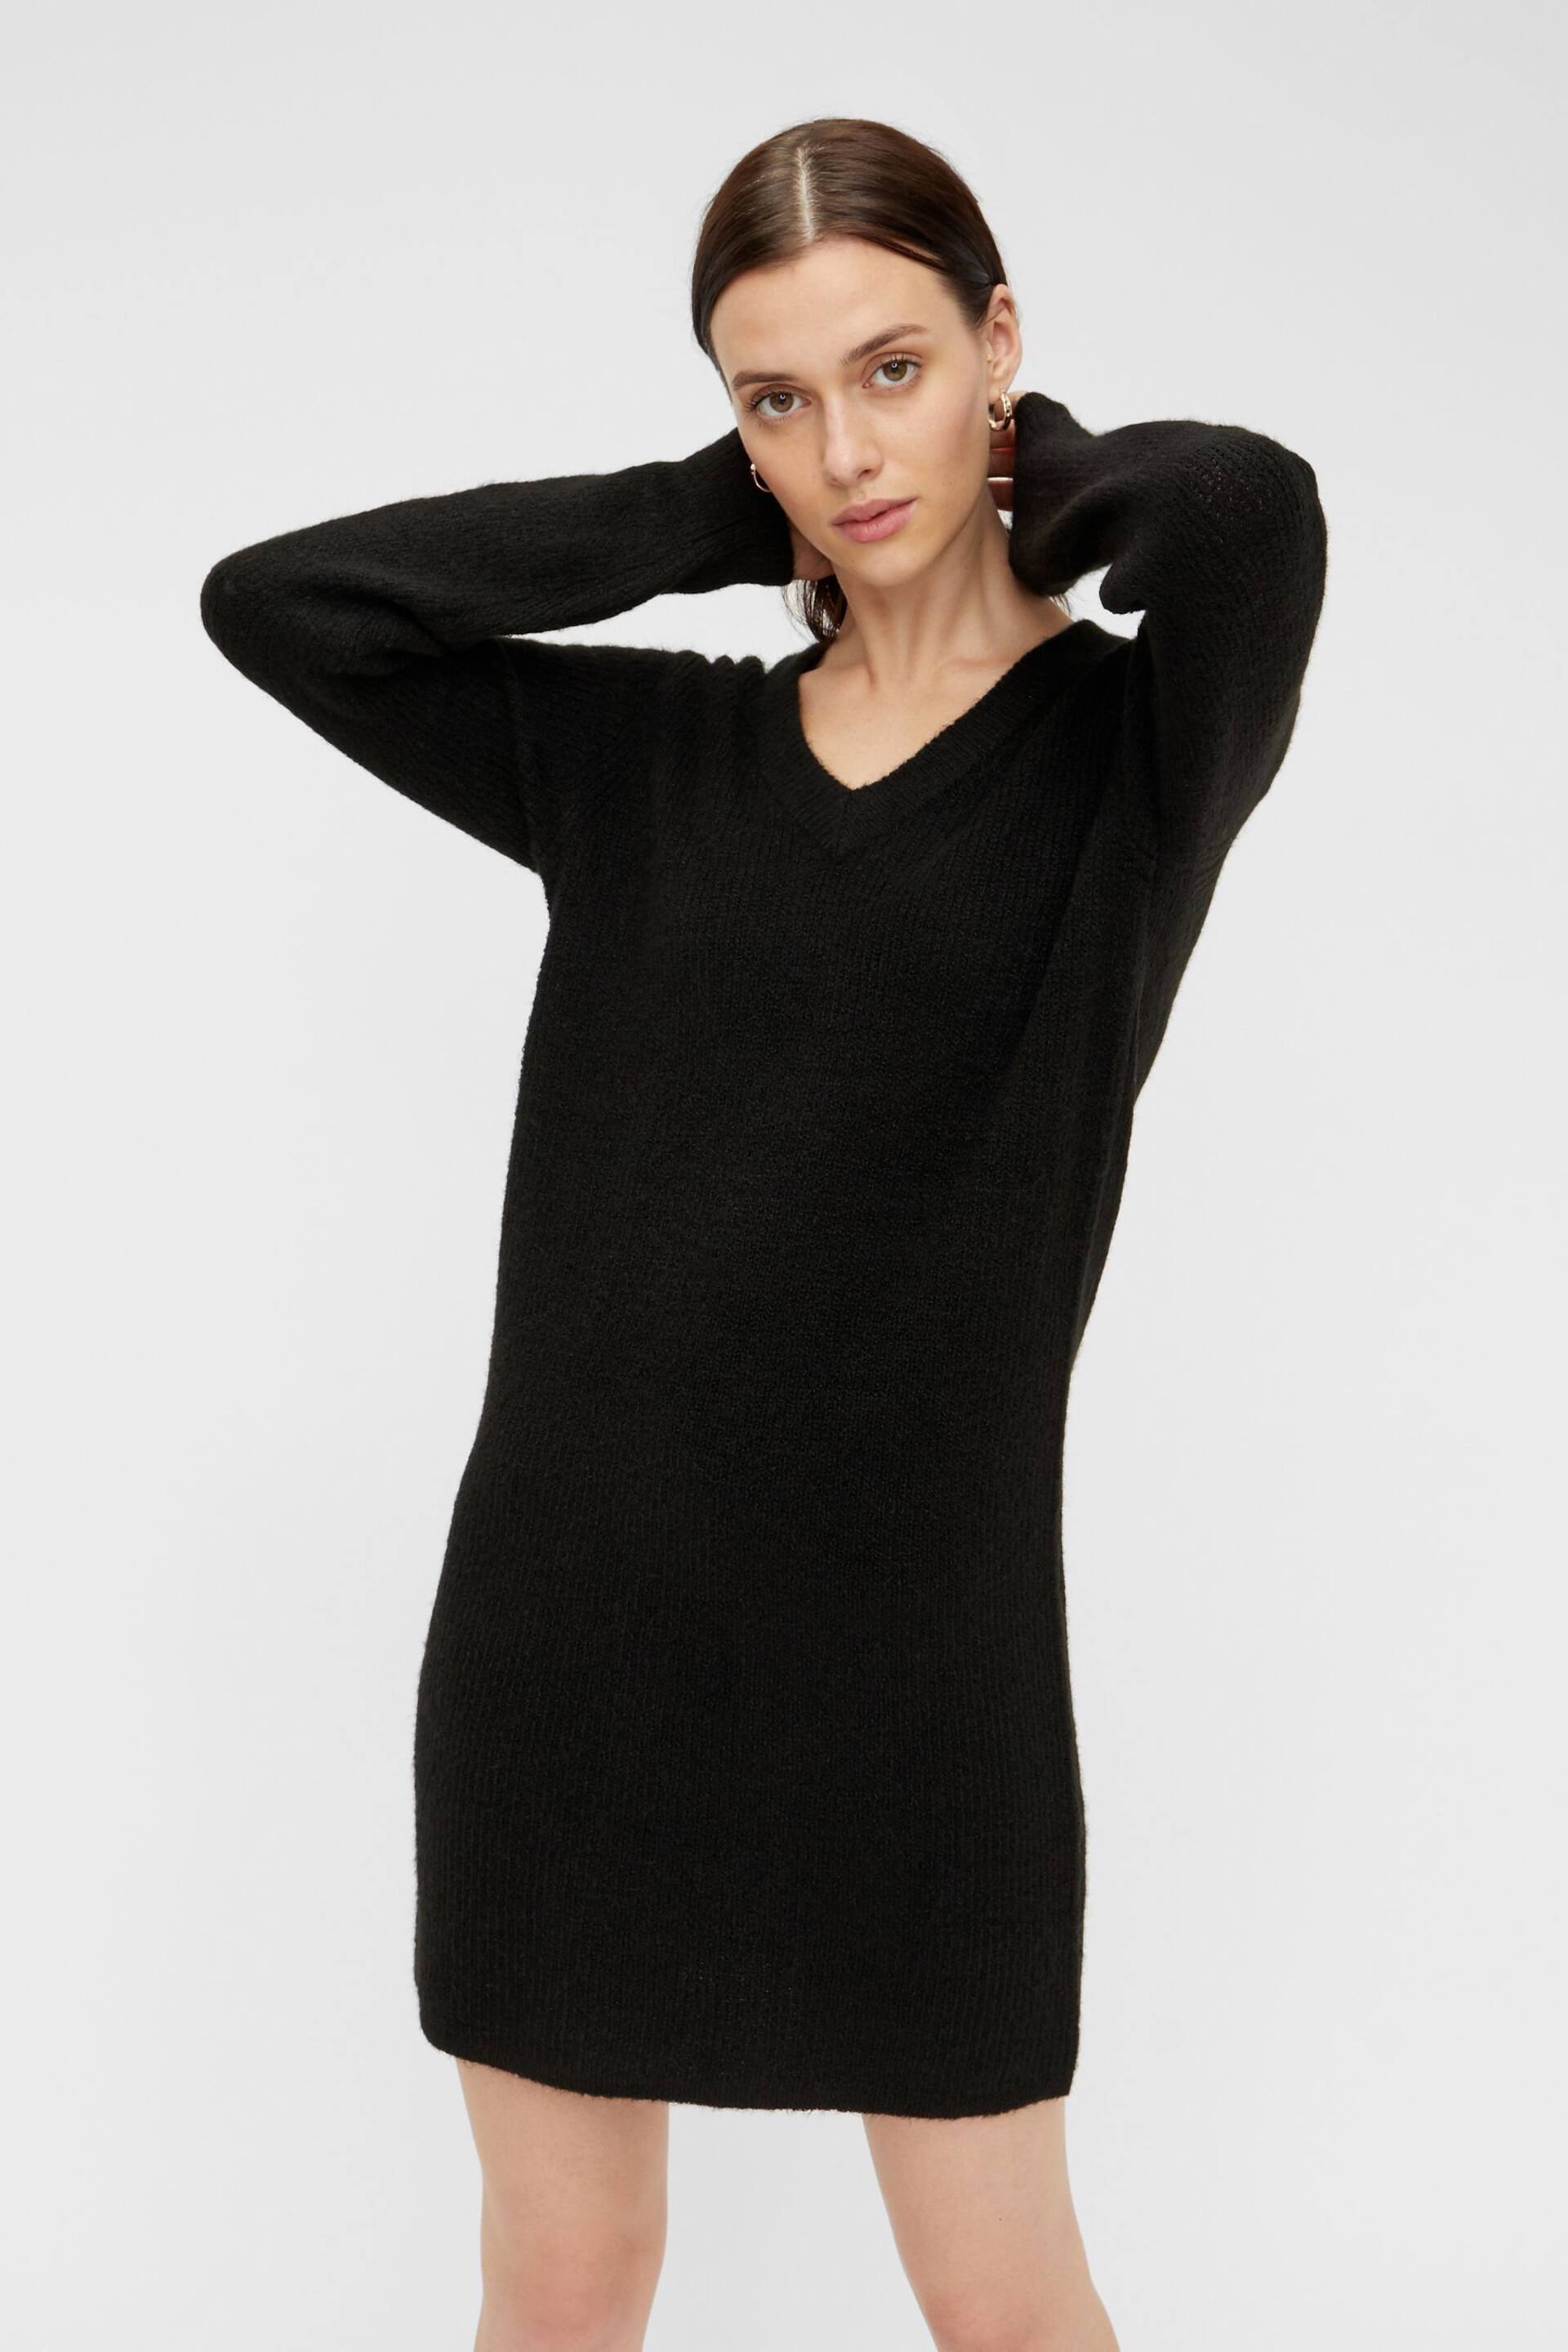 PIECES Black Long Sleeve V Neck Knitted Jumper Dress - Image 1 of 5